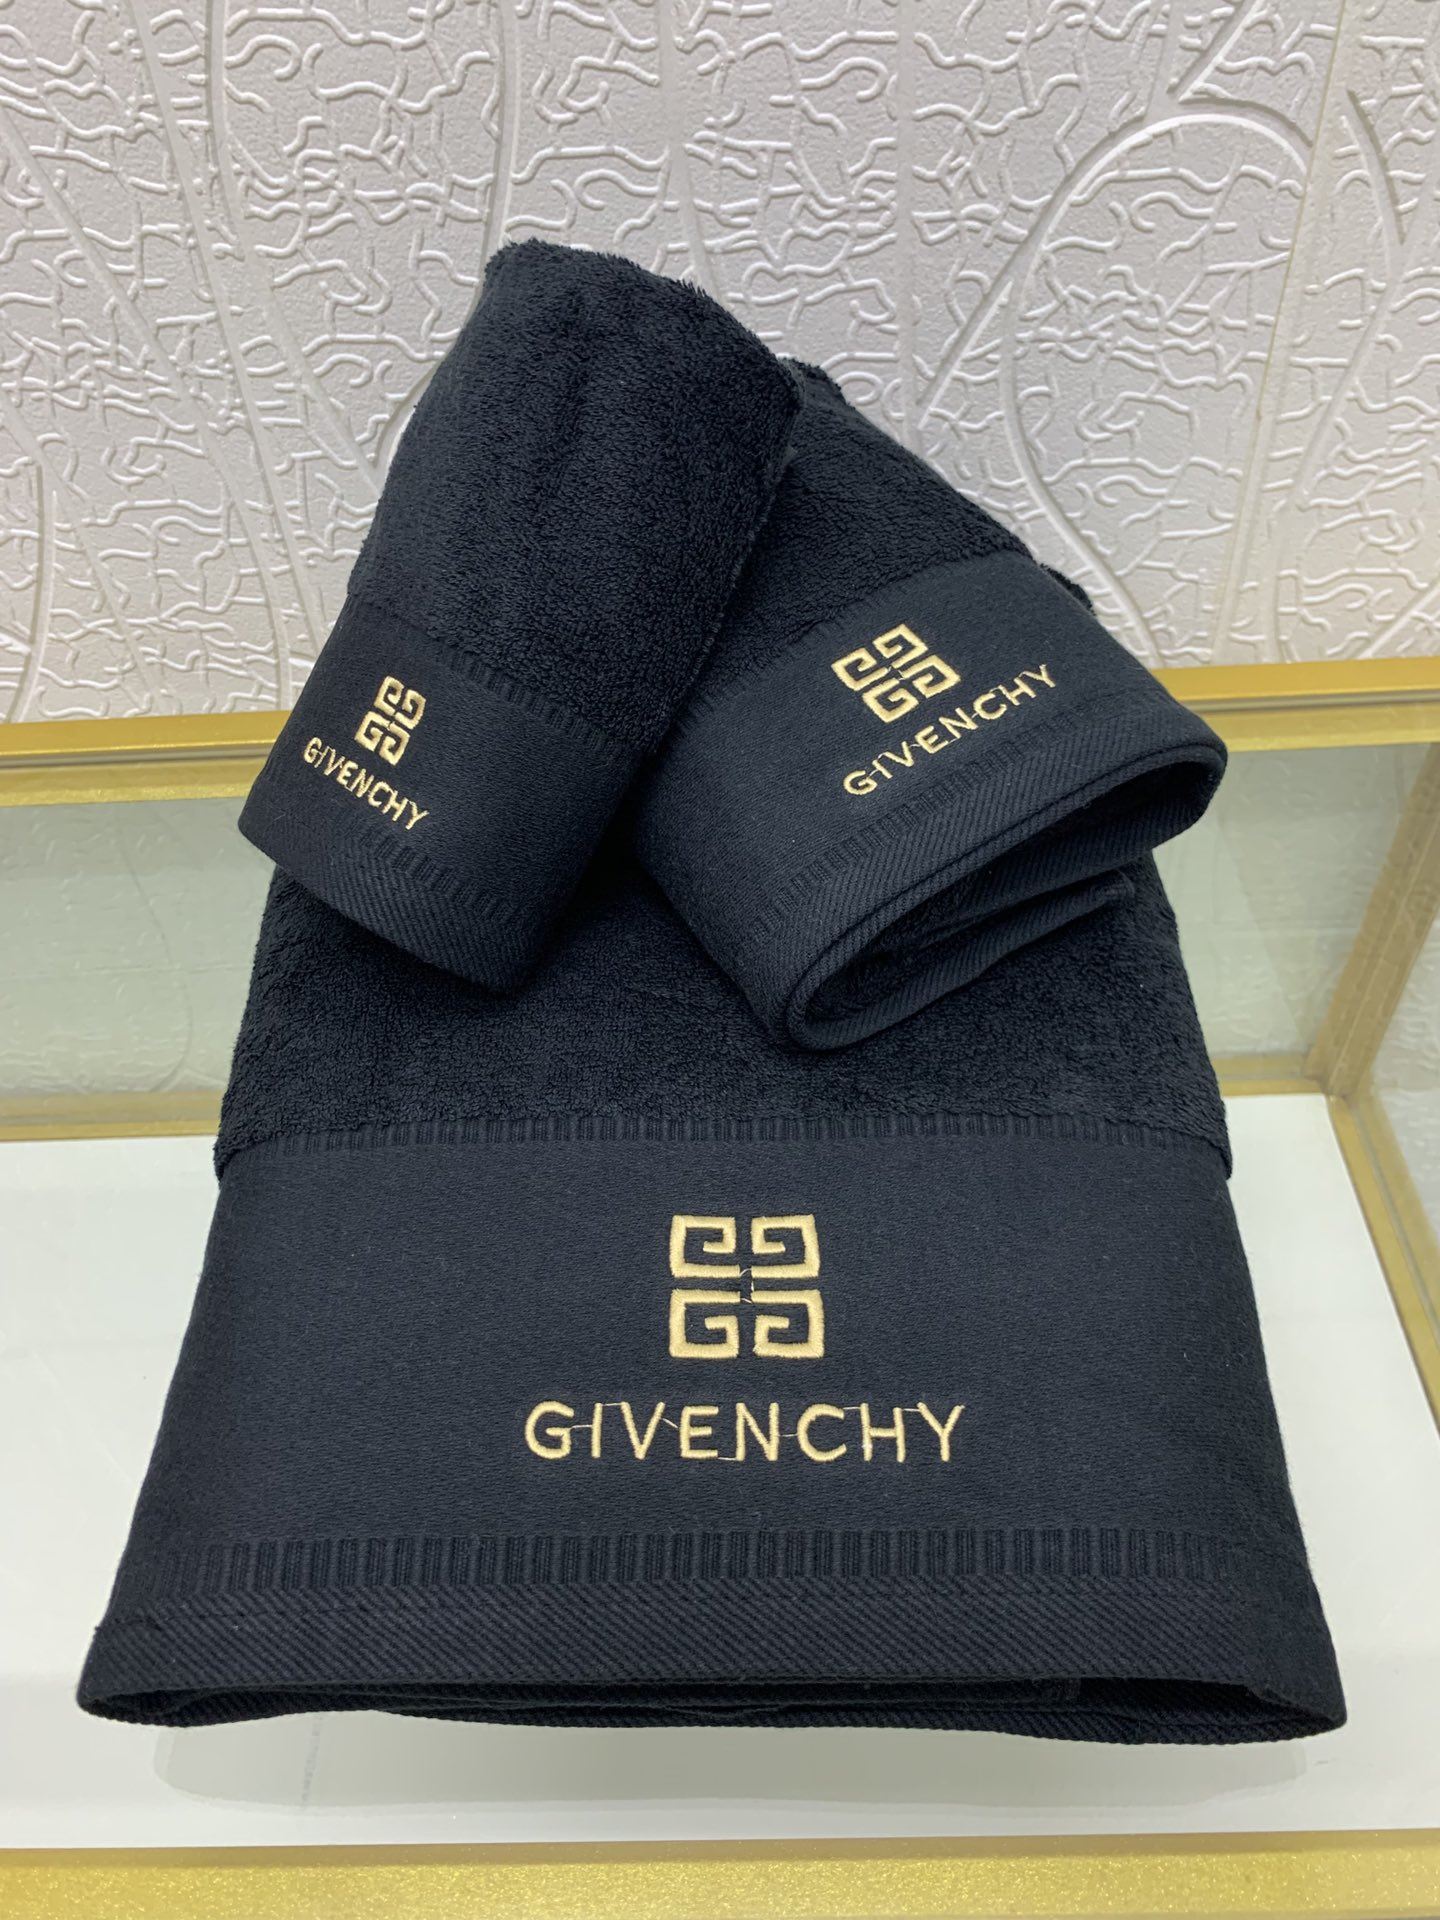 Givenchy Bath Towel